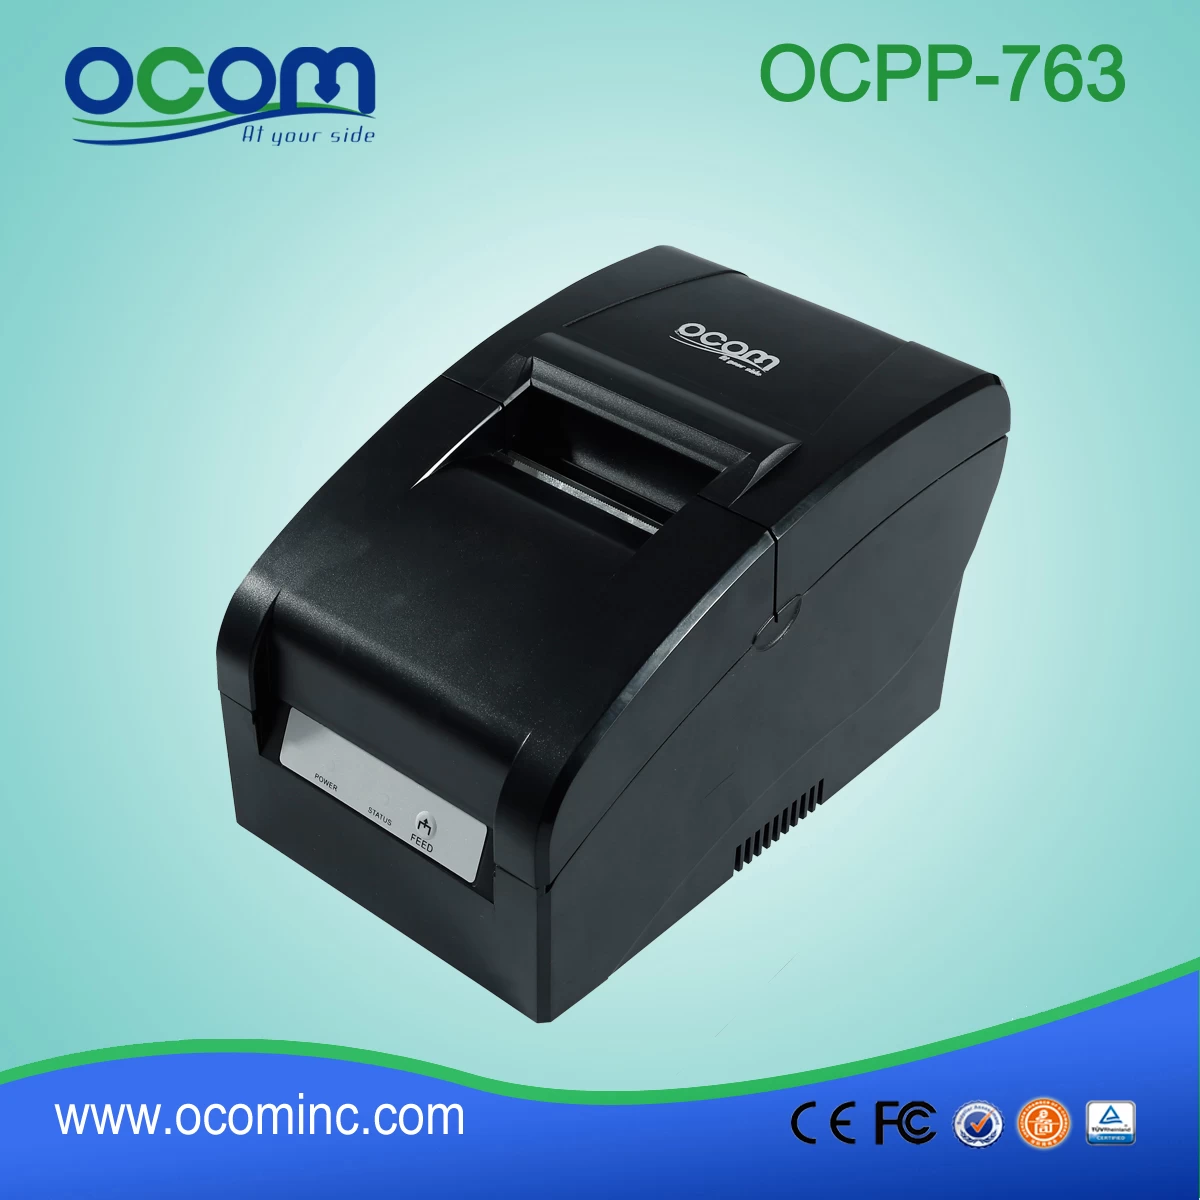 OCPP-763 Mini Impact Dot Matrix Printer With Width Paper Size For Cash Register